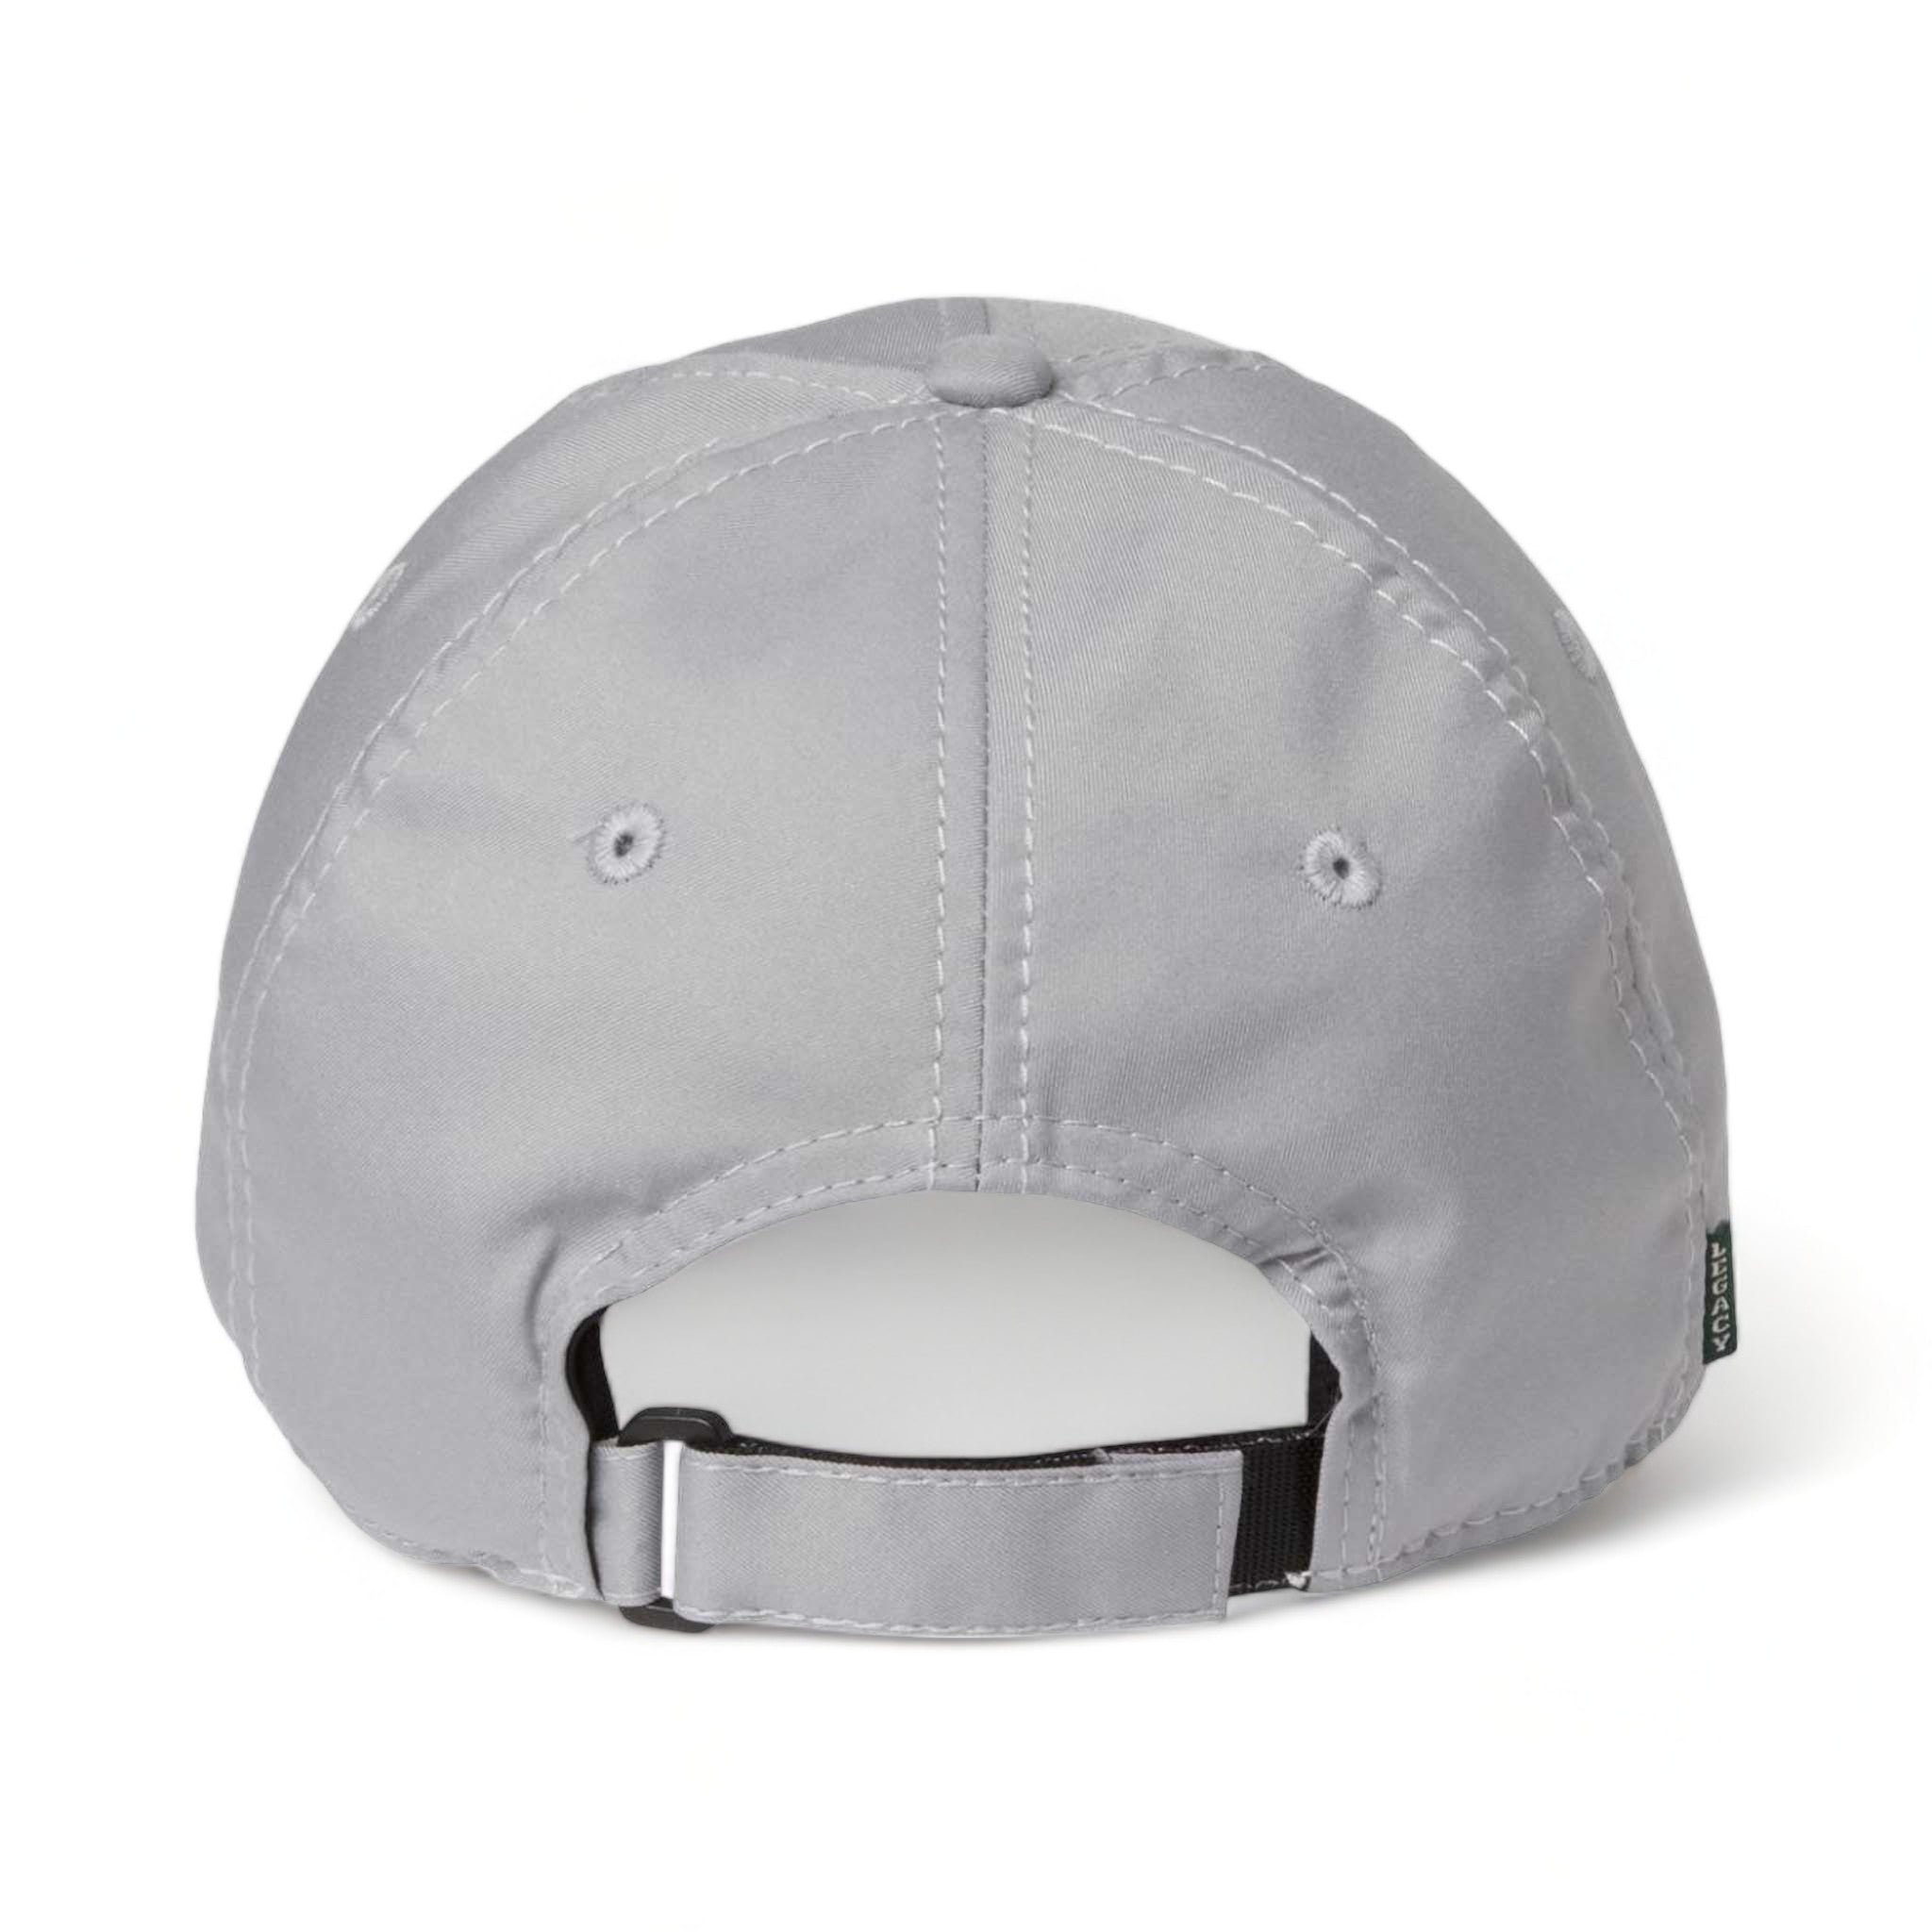 Back view of LEGACY CFA custom hat in shark grey